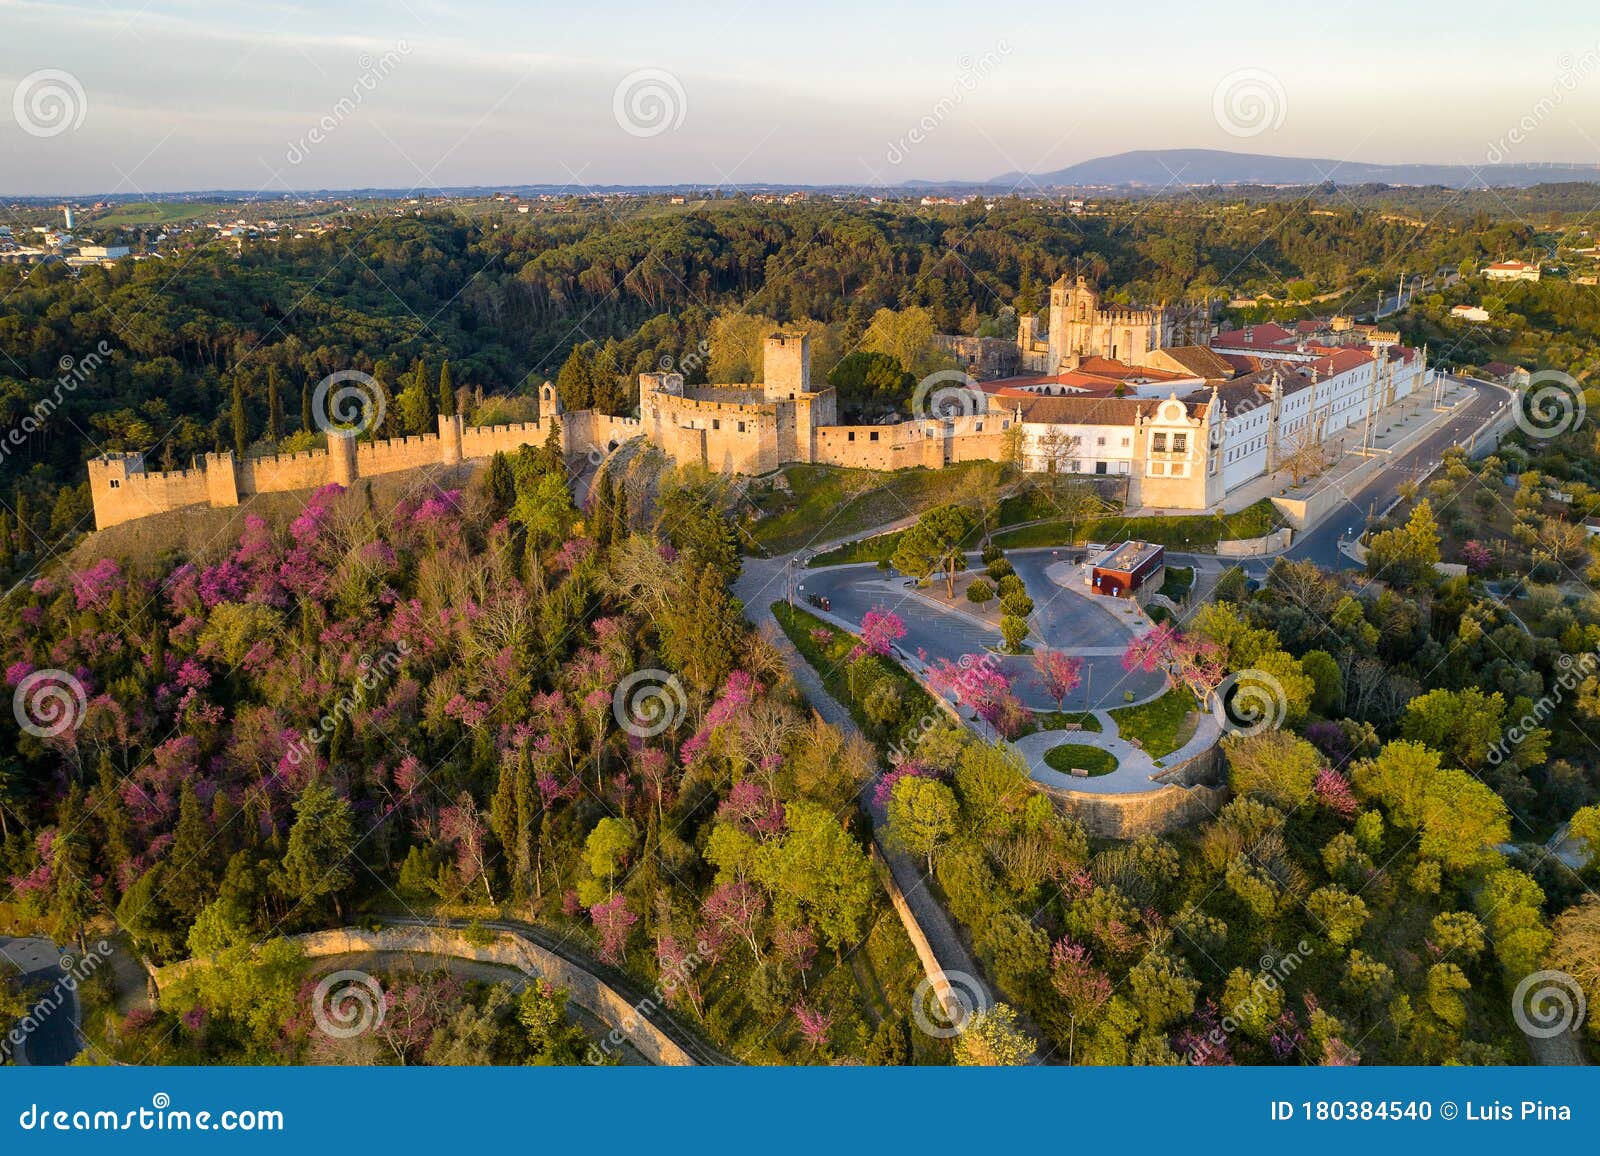 aerial drone view of convento de cristo christ convent in tomar at sunrise, portugal